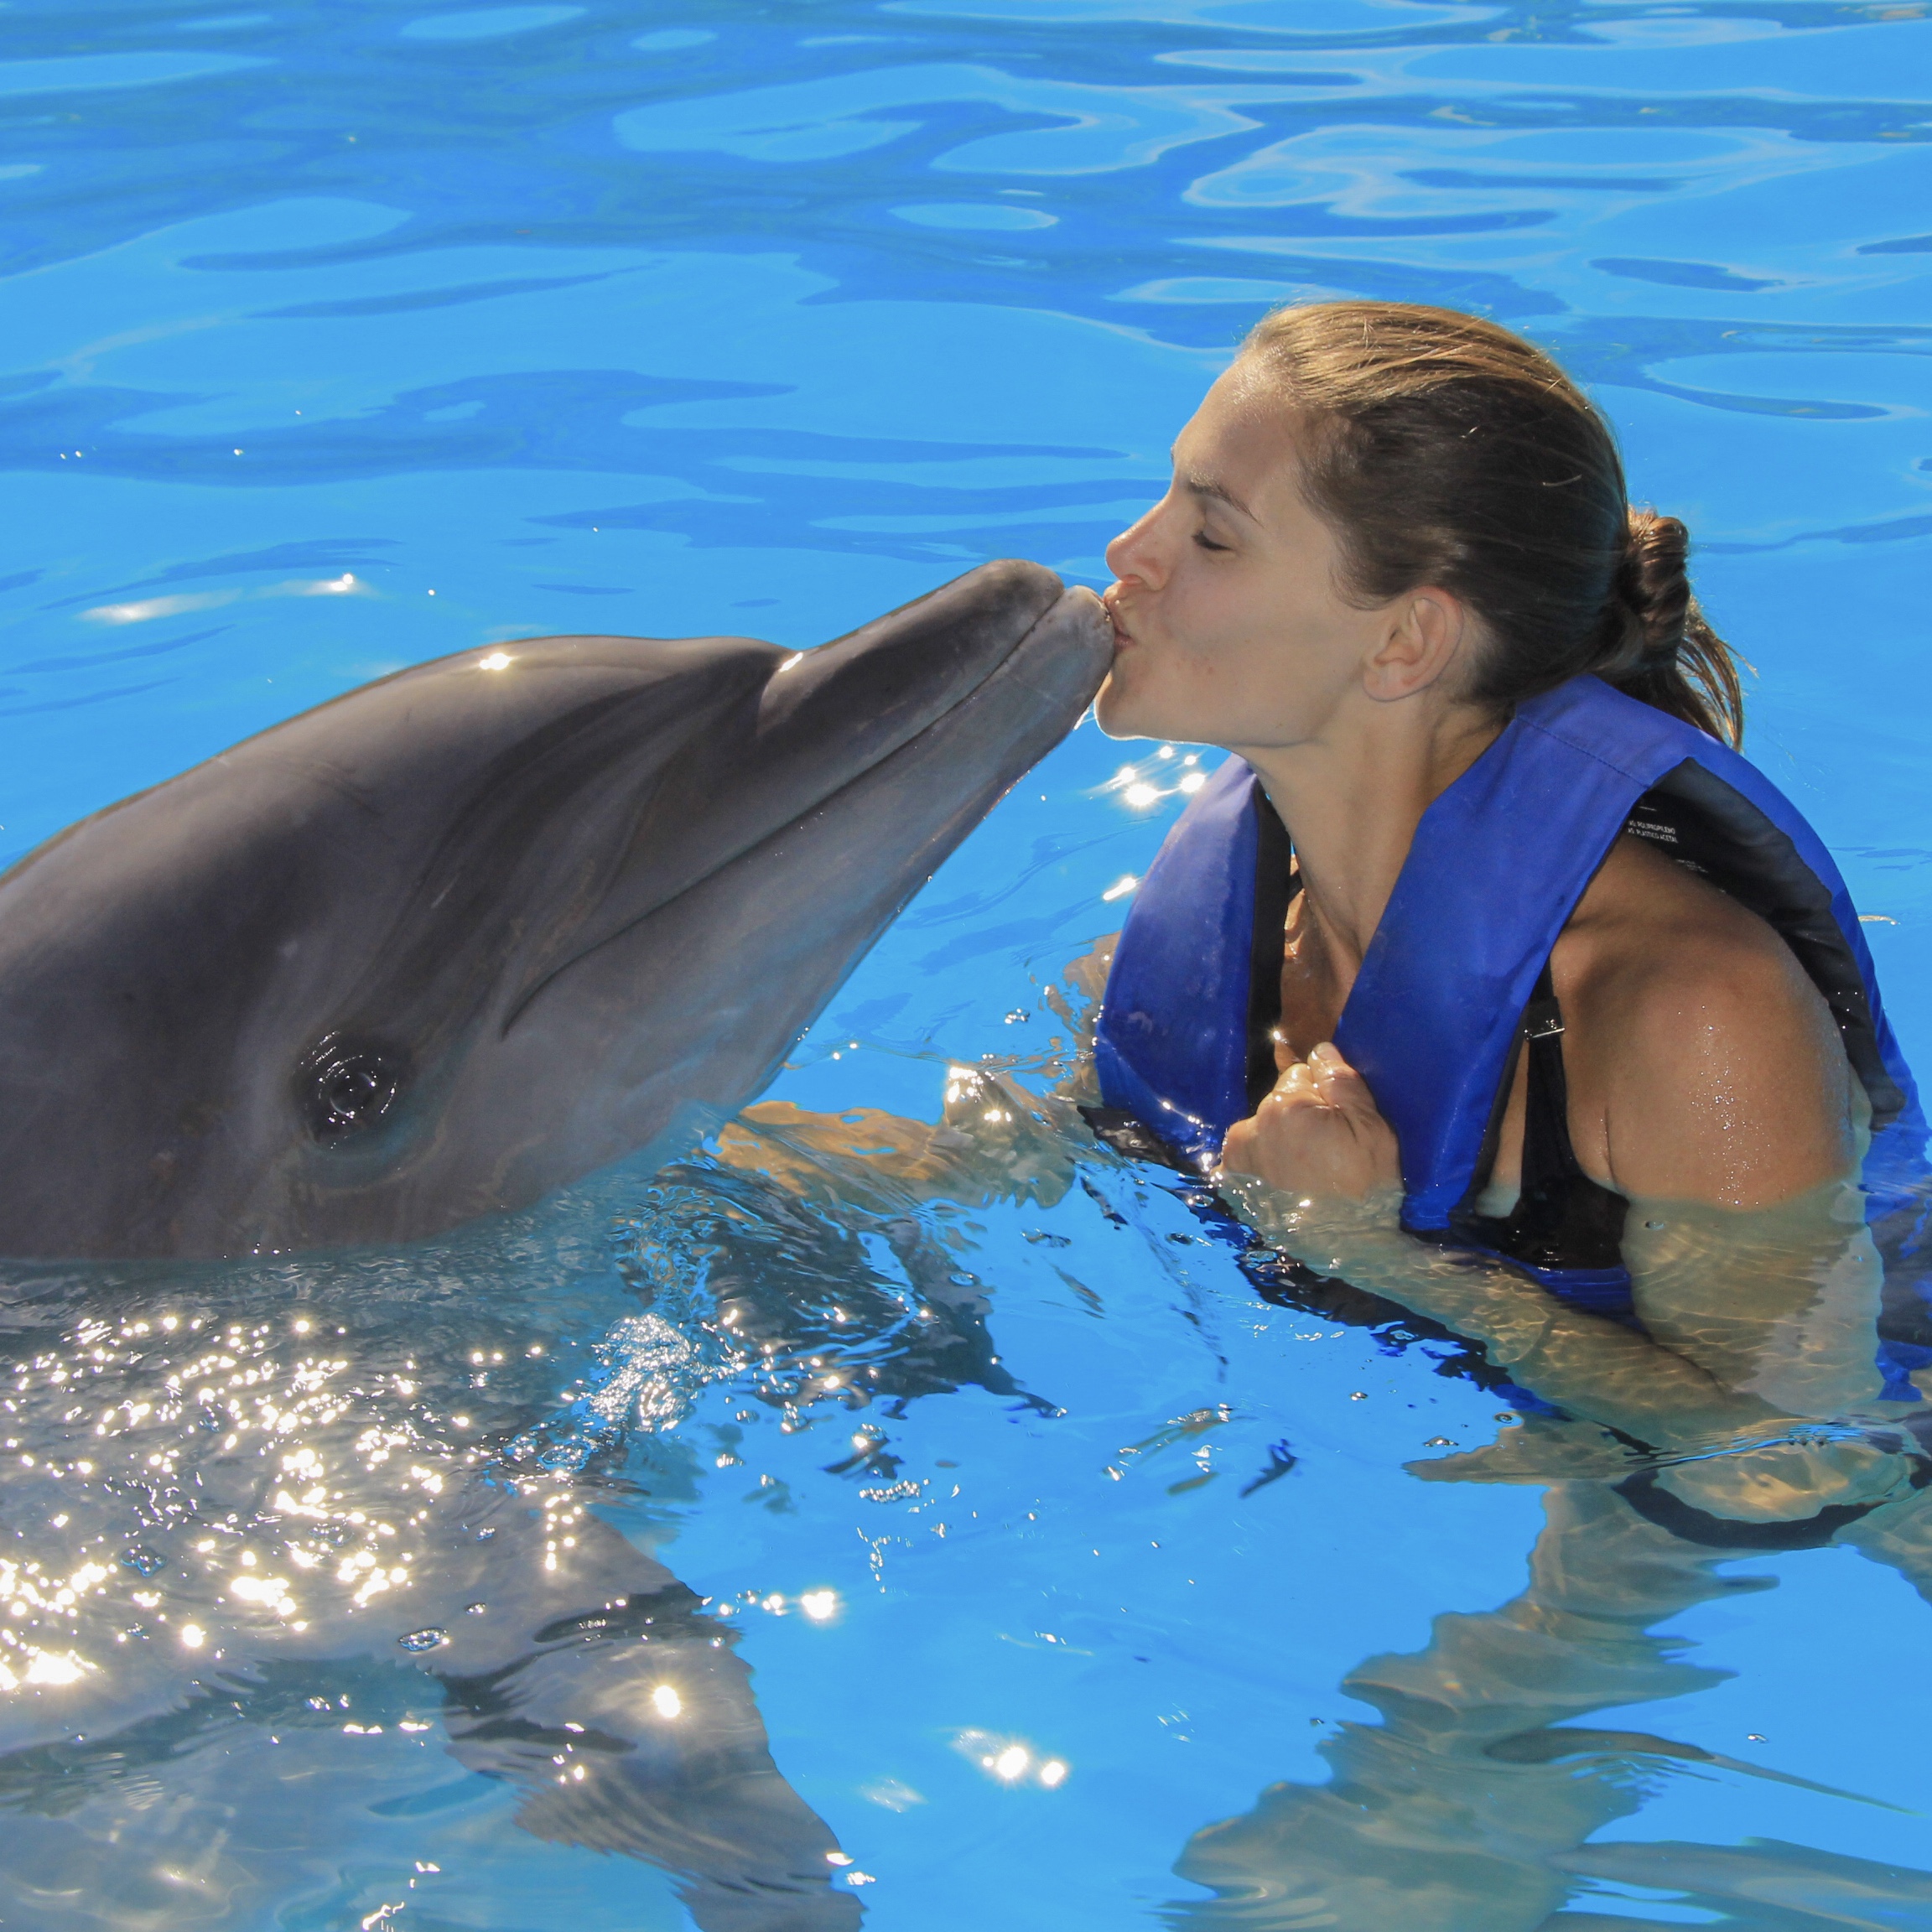 Dolphin Experience